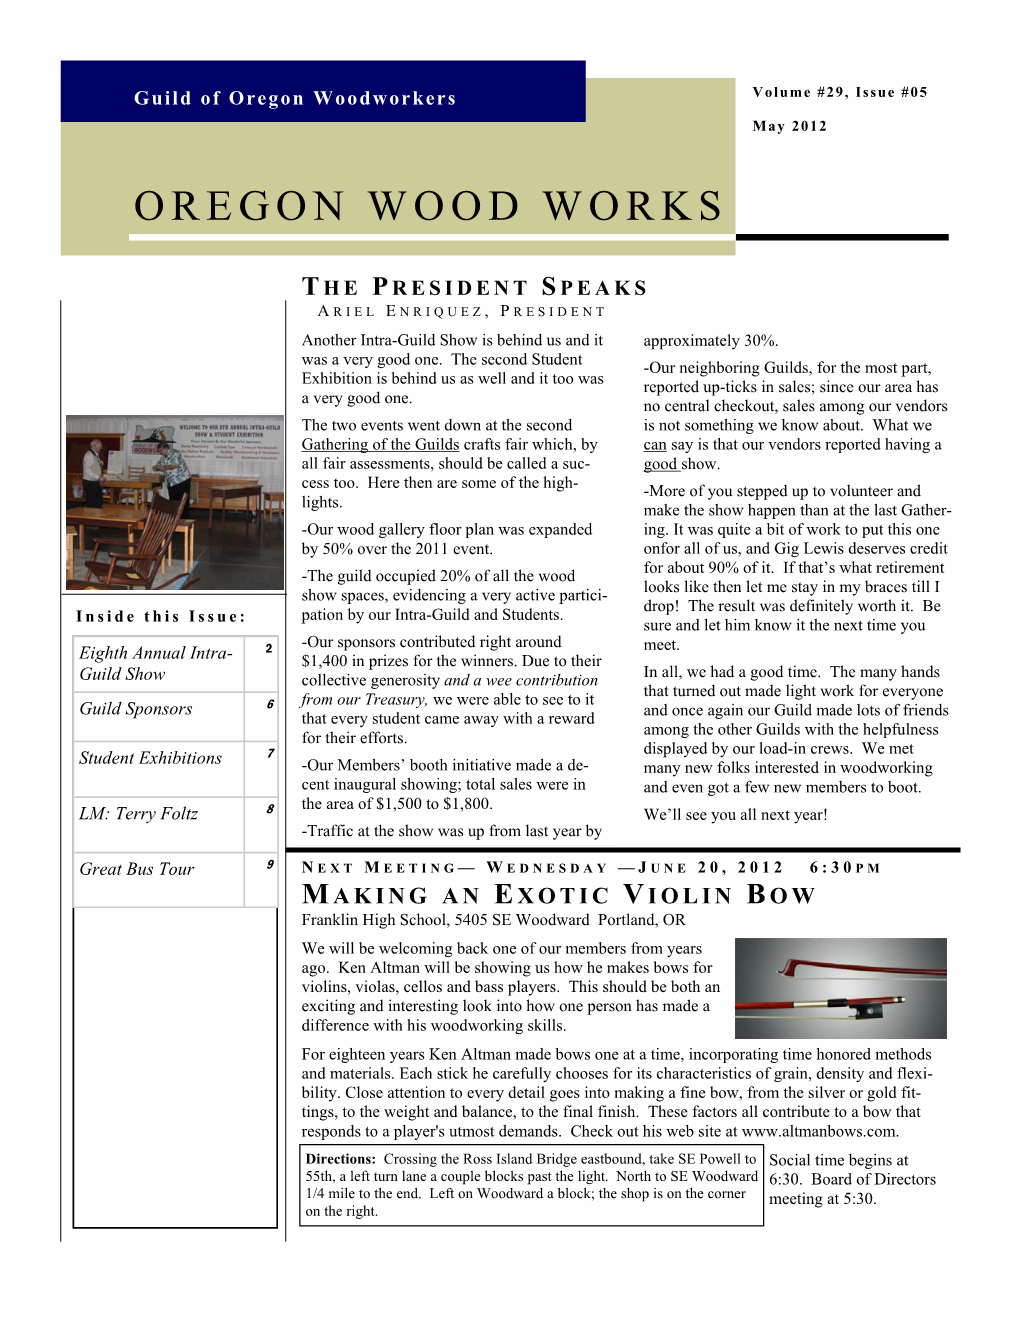 Oregon Wood Works